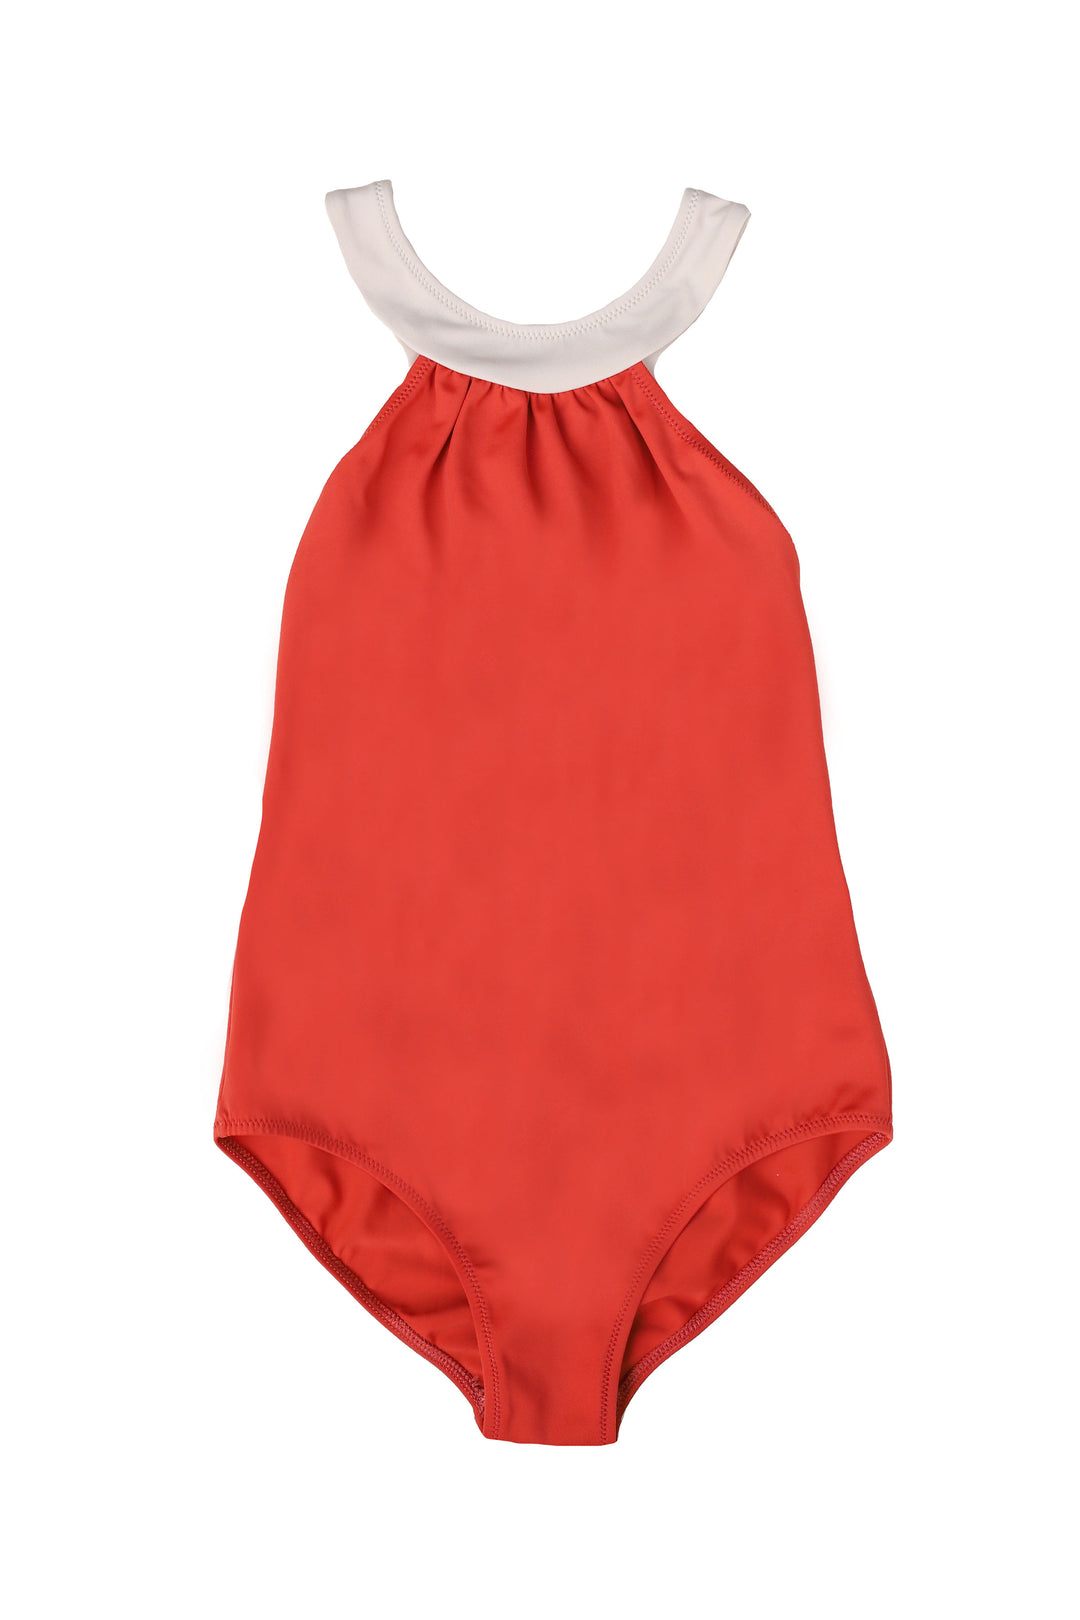 Swimsuit Scarlett Terracotta - ملابس السباحة